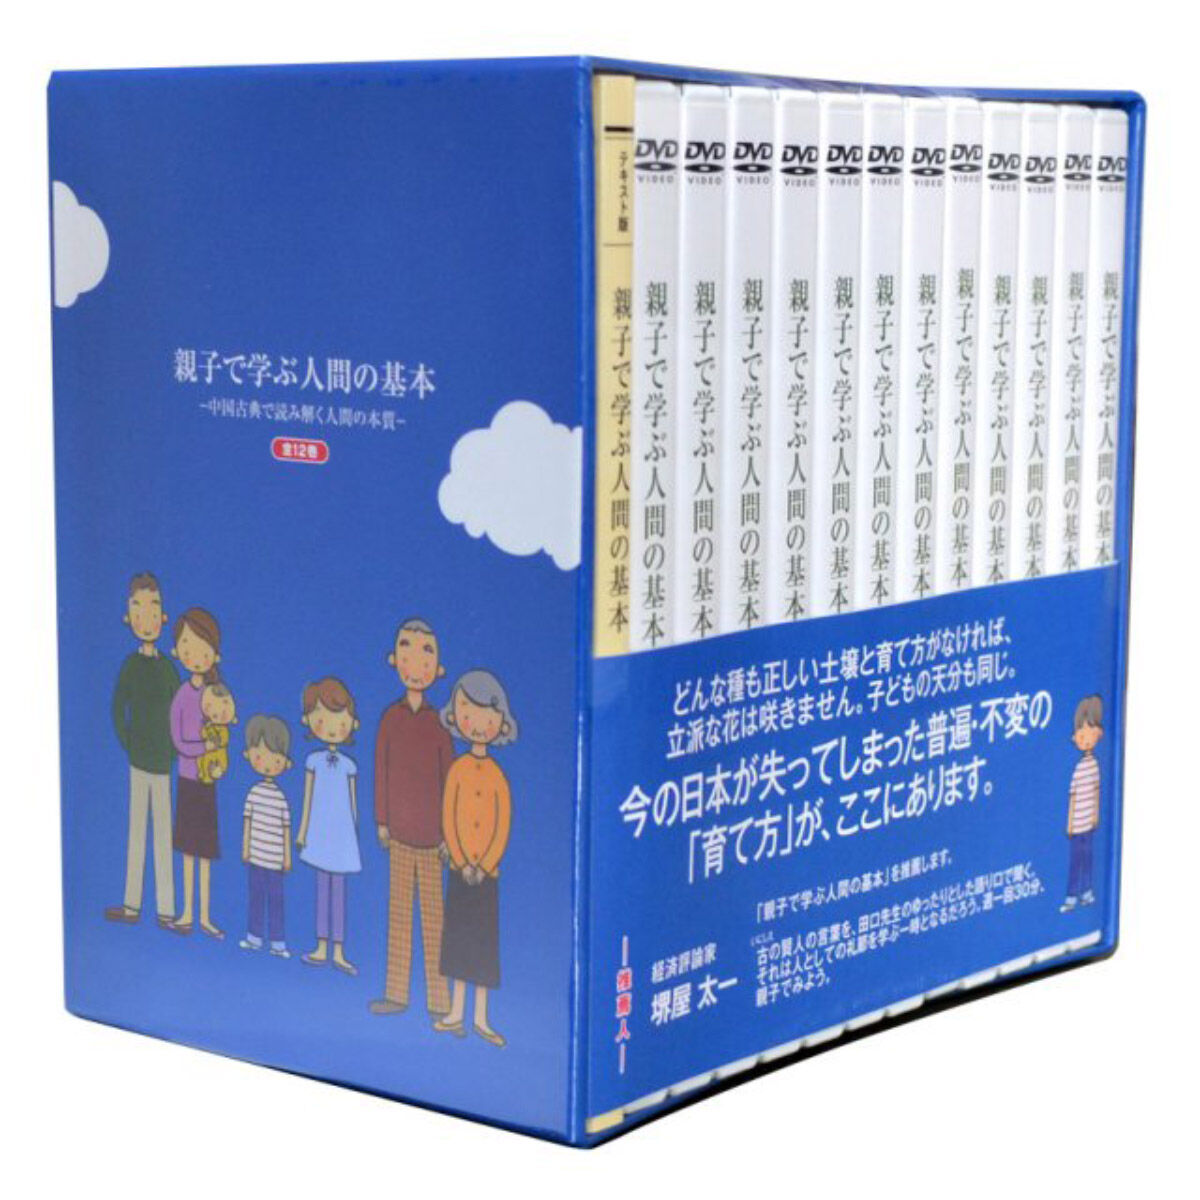 DVD-BOX 親子で学ぶ人間の基本 | フーガブックスオンラインストア